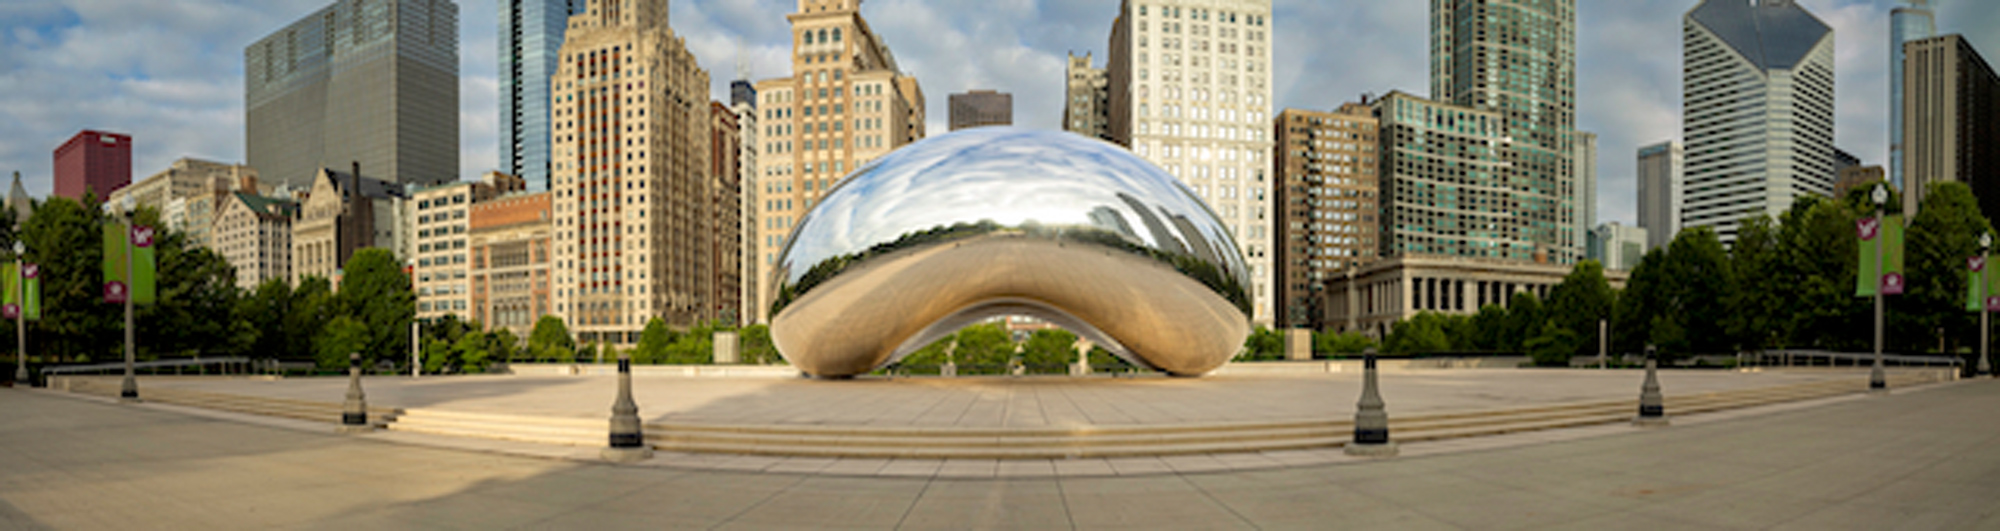 The Chicago Bean Panorama, 